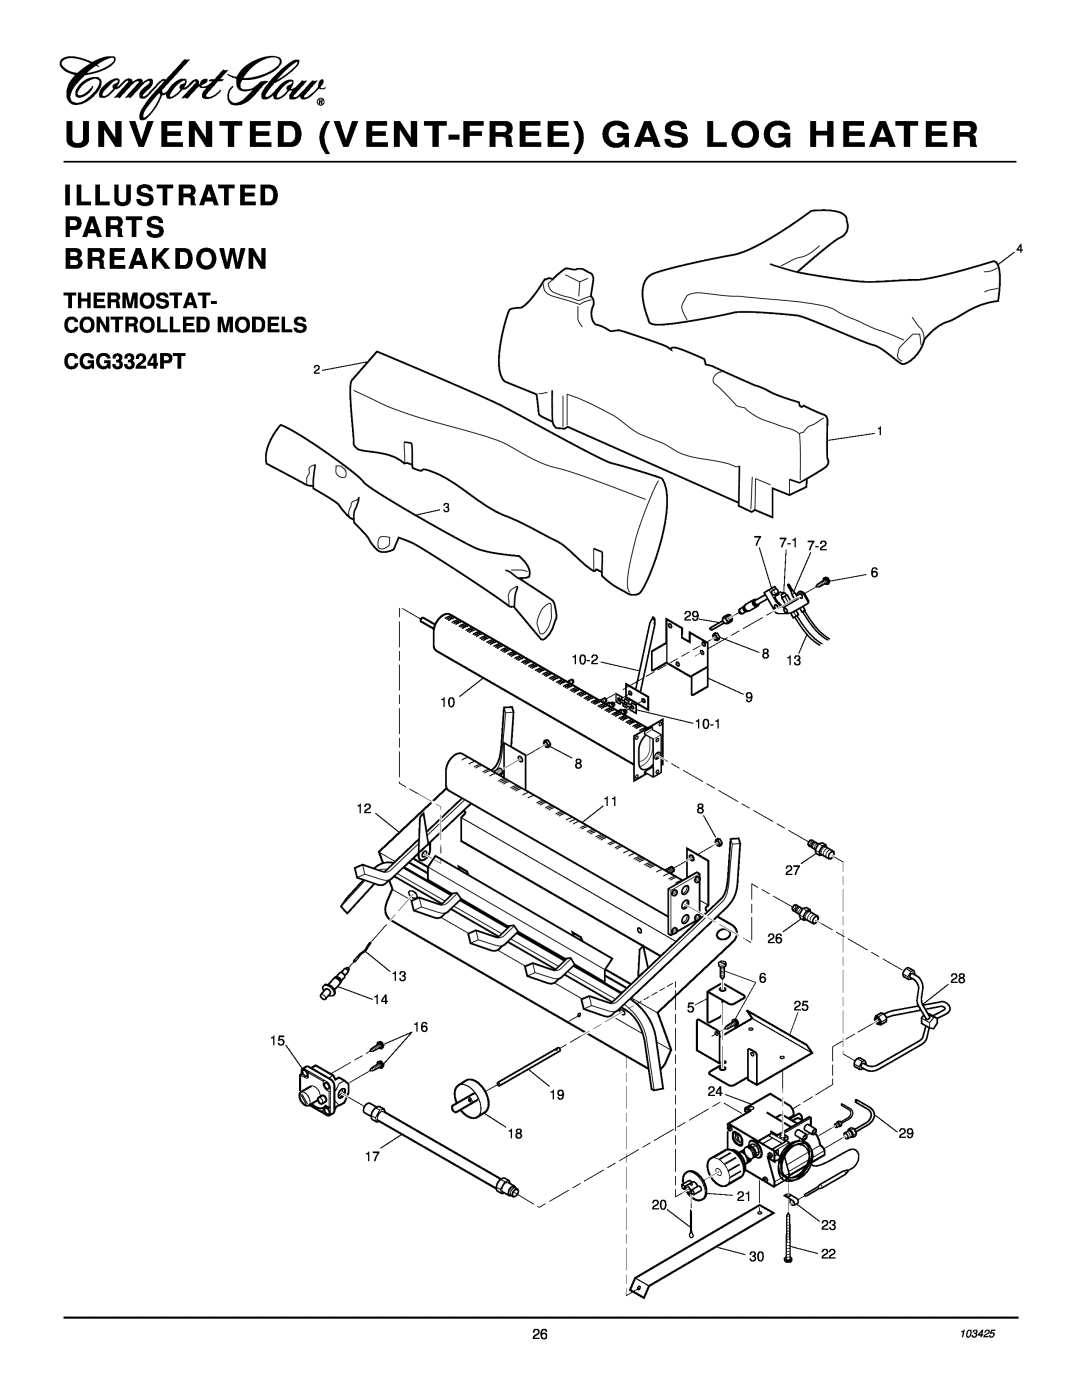 Desa CGG2618P, CGG3630P Unvented Vent-Freegas Log Heater, Illustrated Parts Breakdown, 10-2, 13 14, 628, 21 23, 103425 